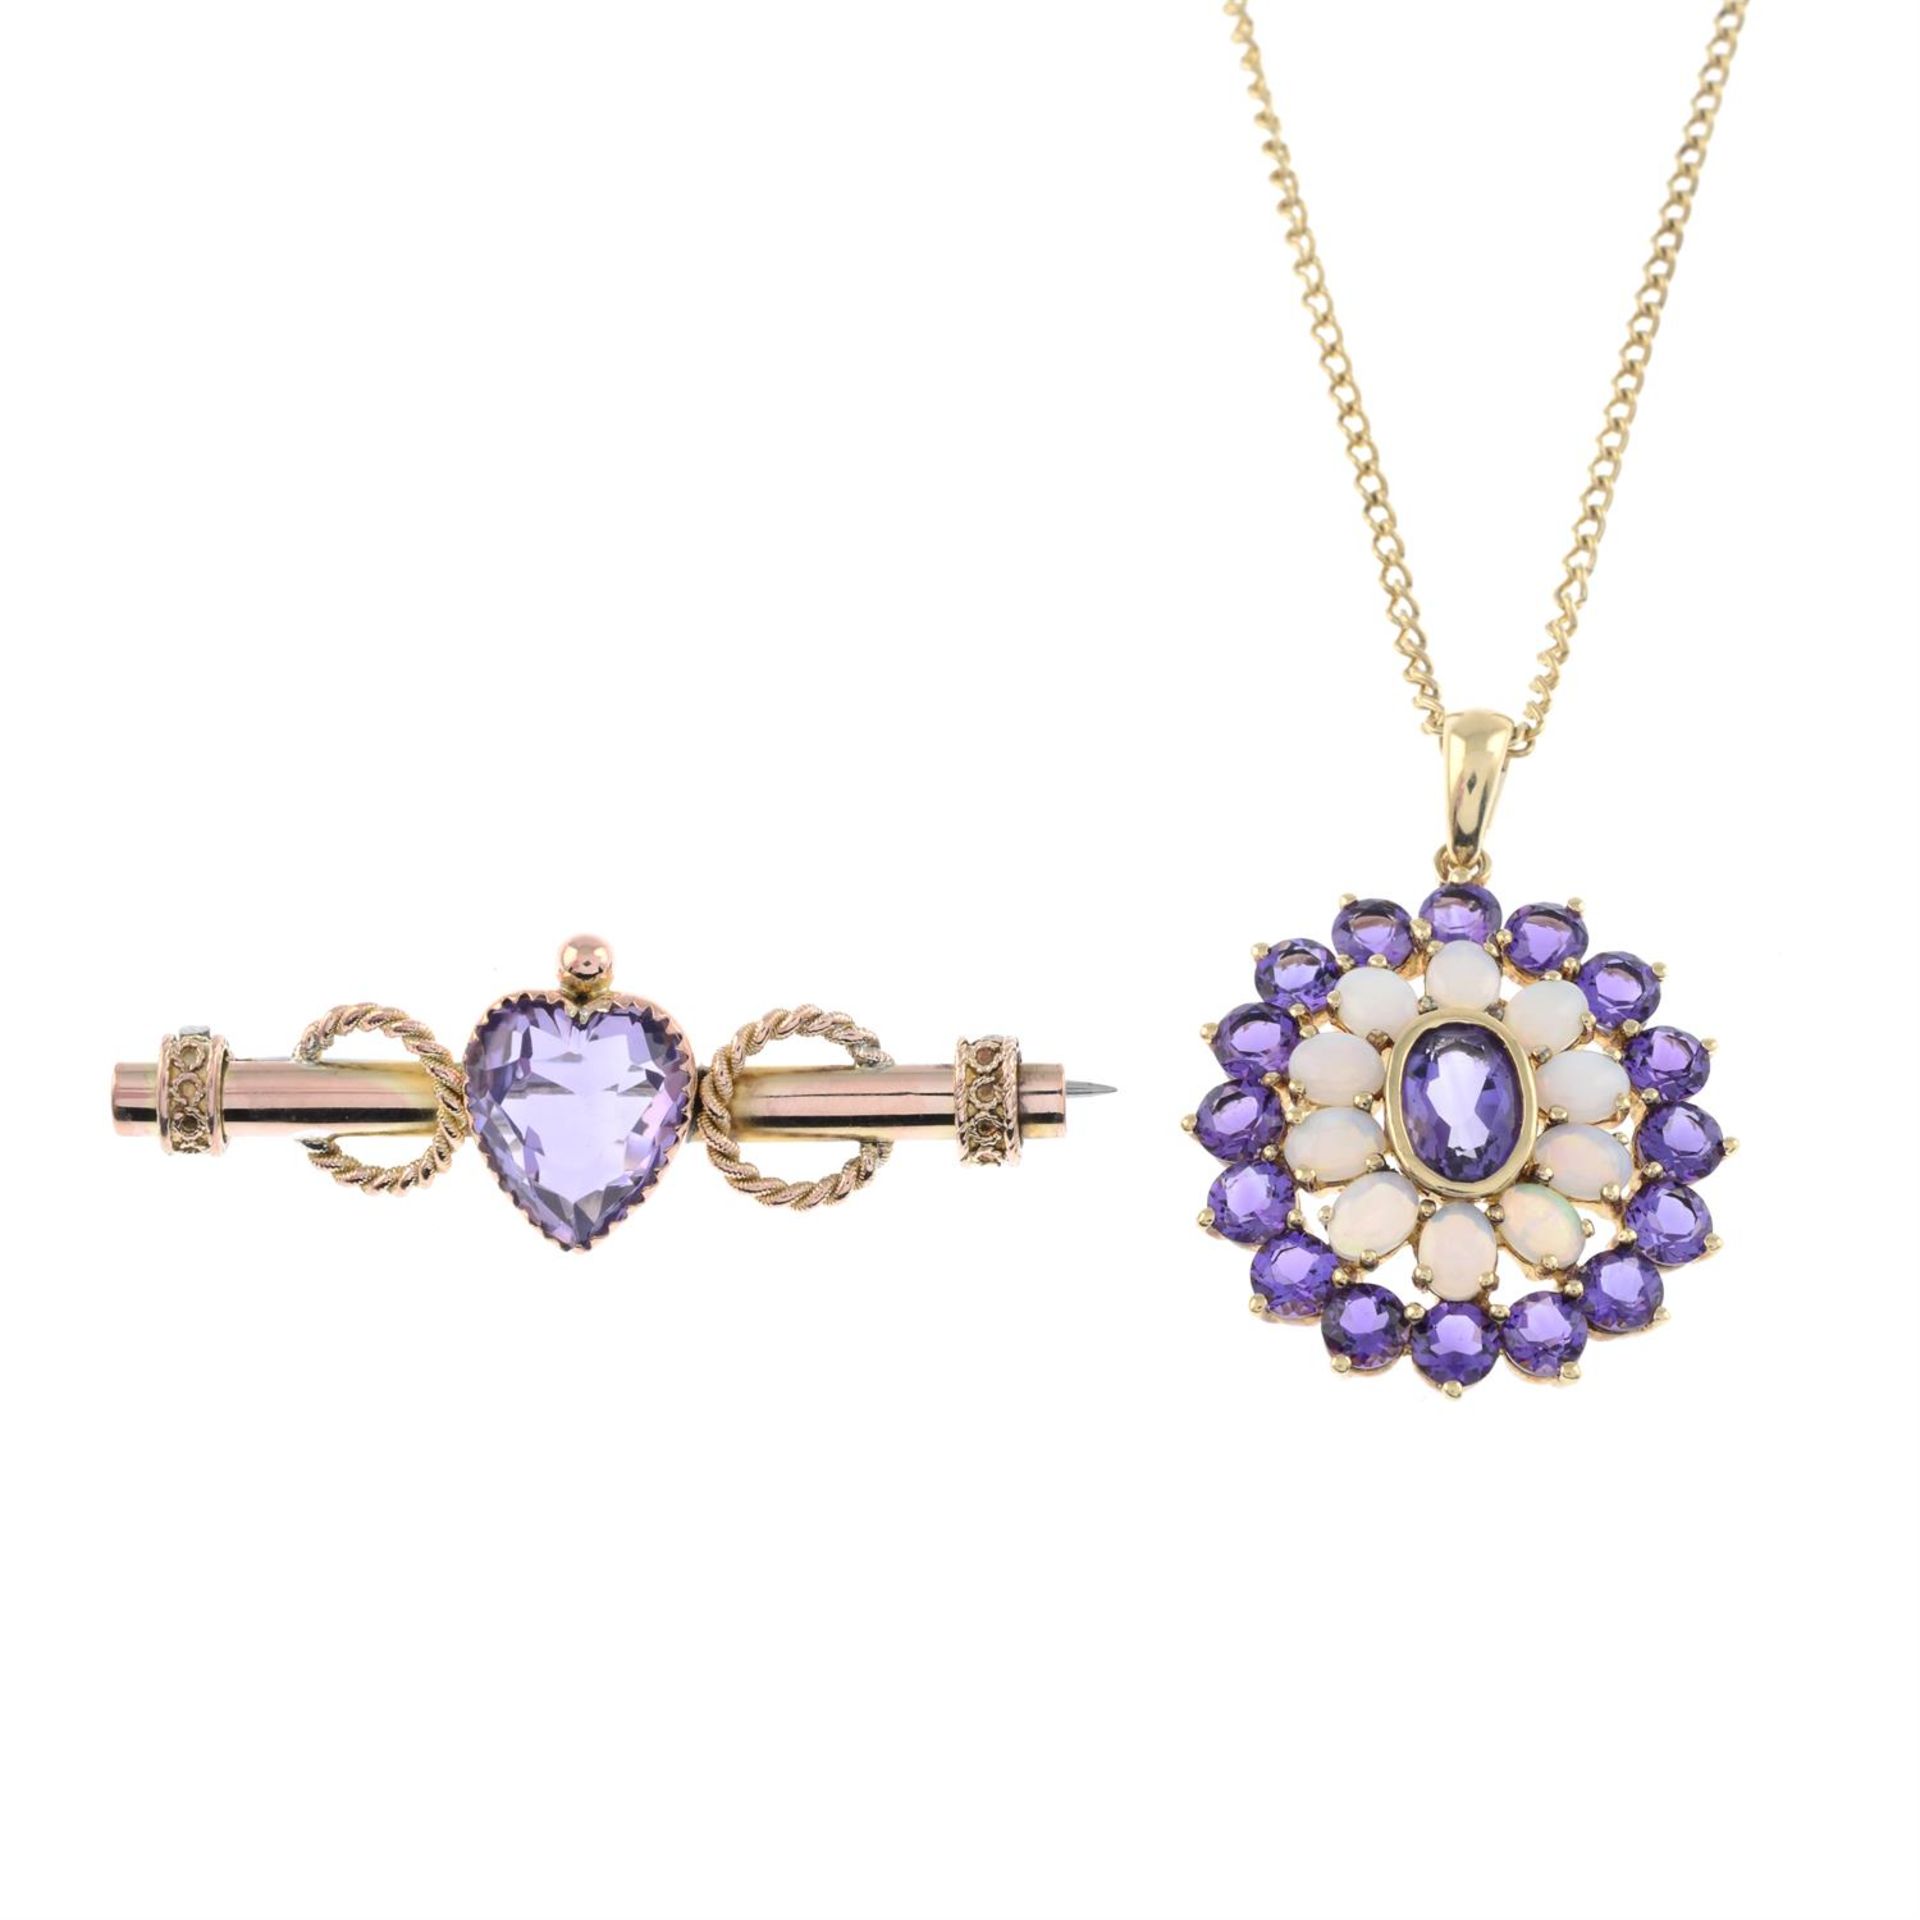 Amethyst and opal pendant & brooch